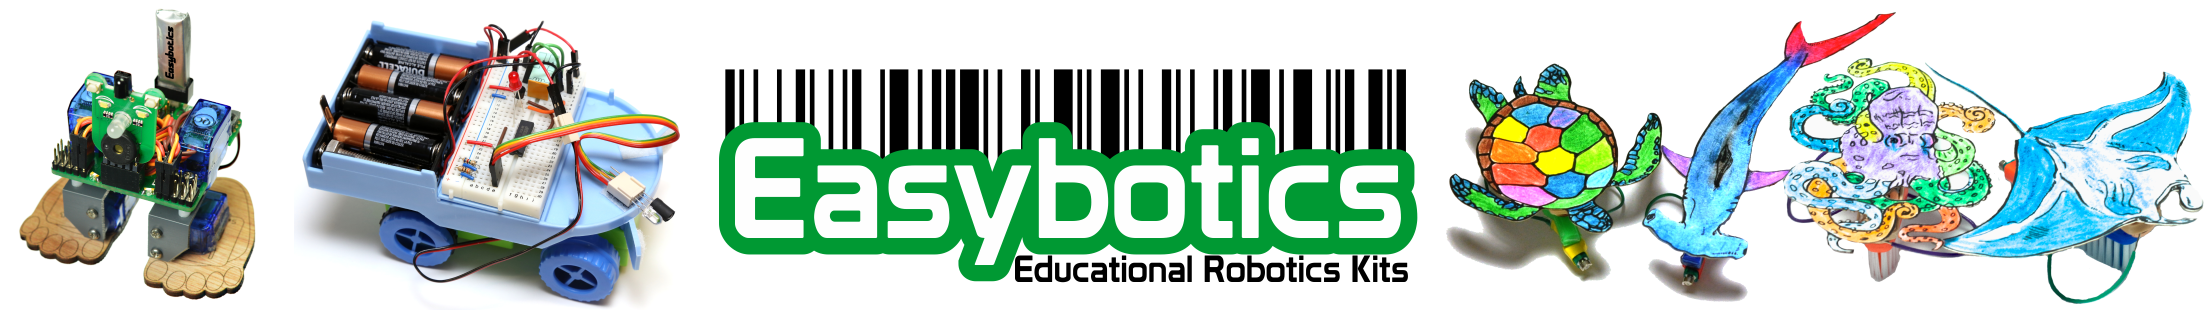 Easybotics LLC Logo